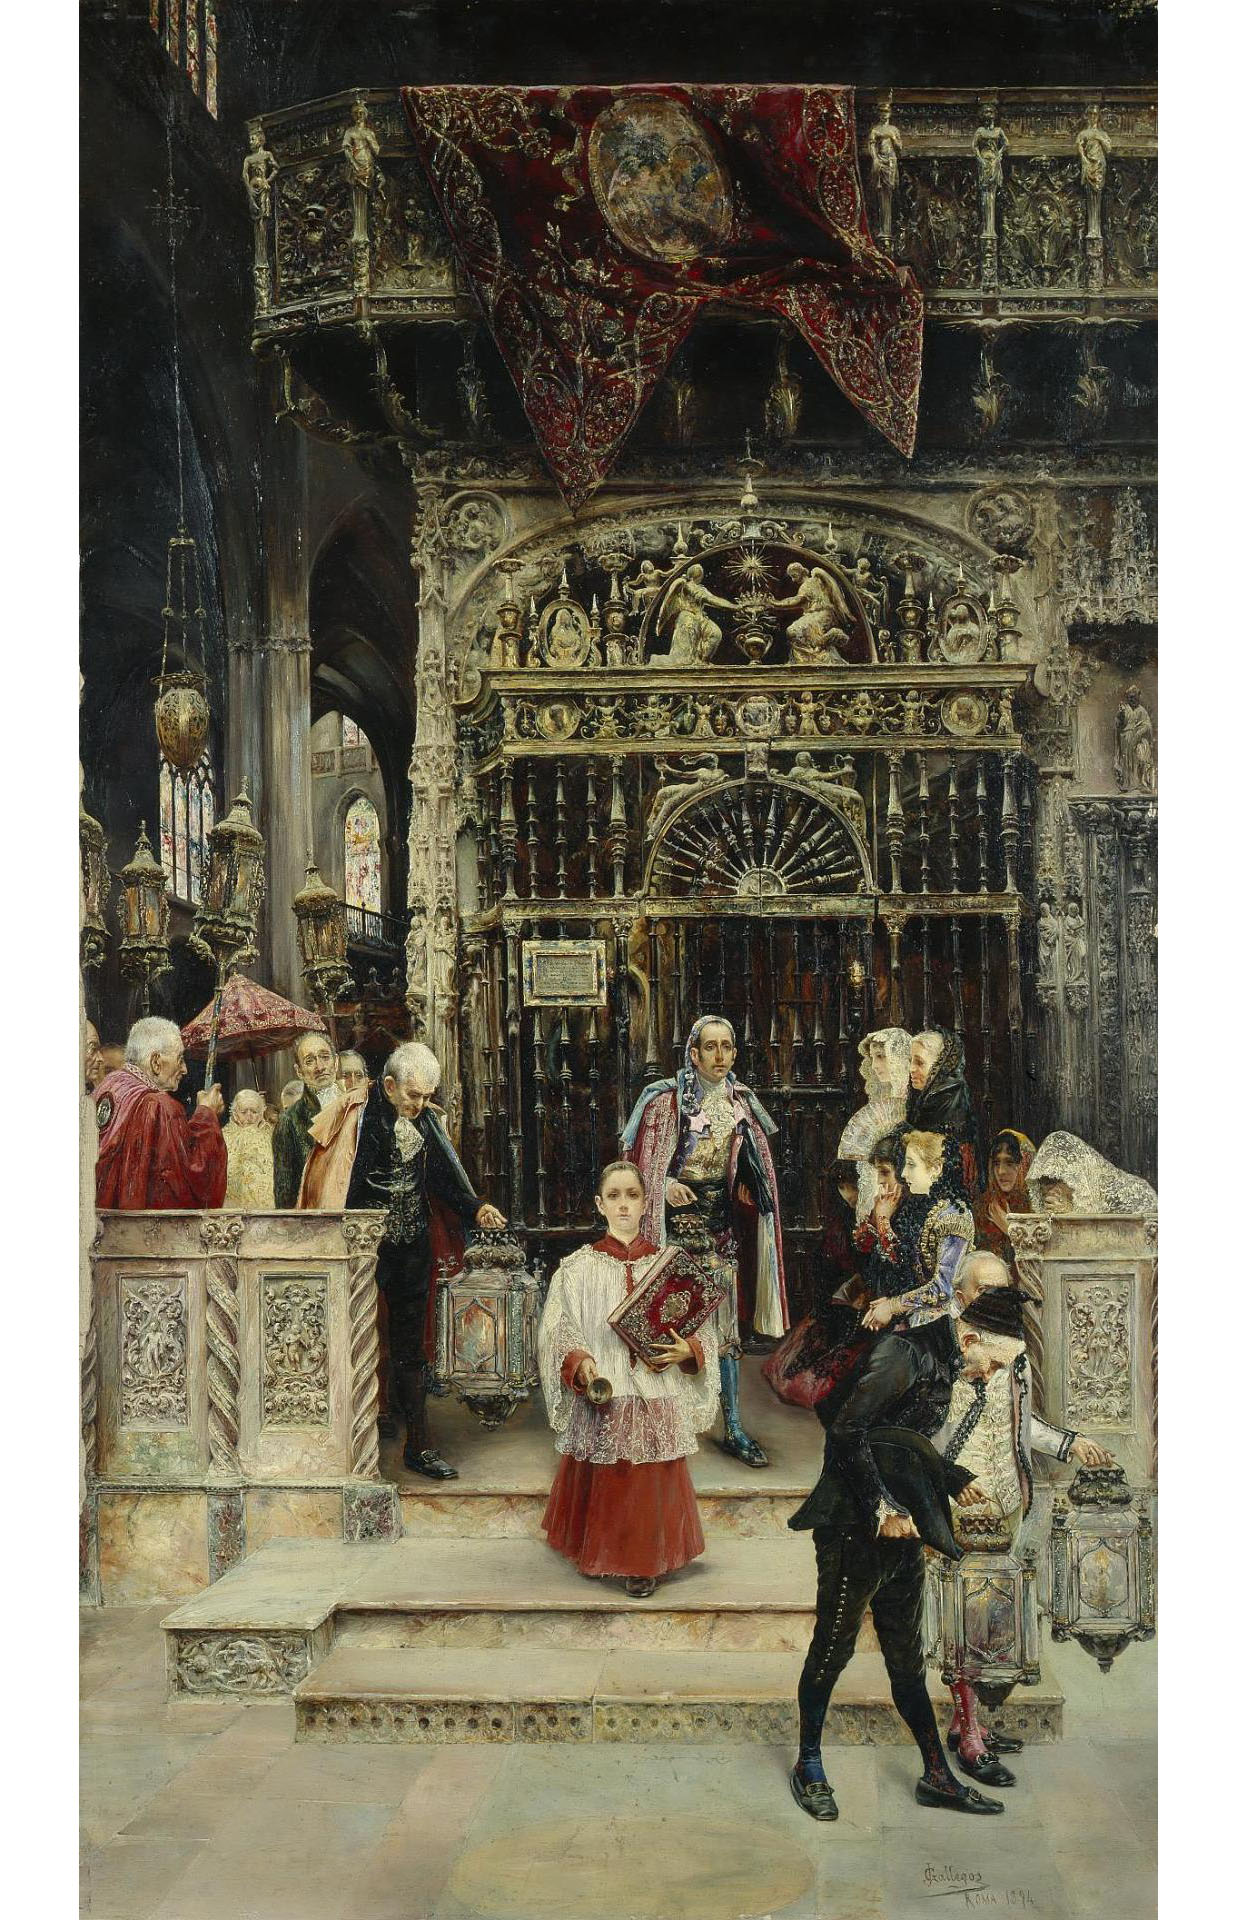 Хосе Гальегос-и-Арноса. "Выход из церкви". 1894. Эрмитаж, Санкт-Петербург.